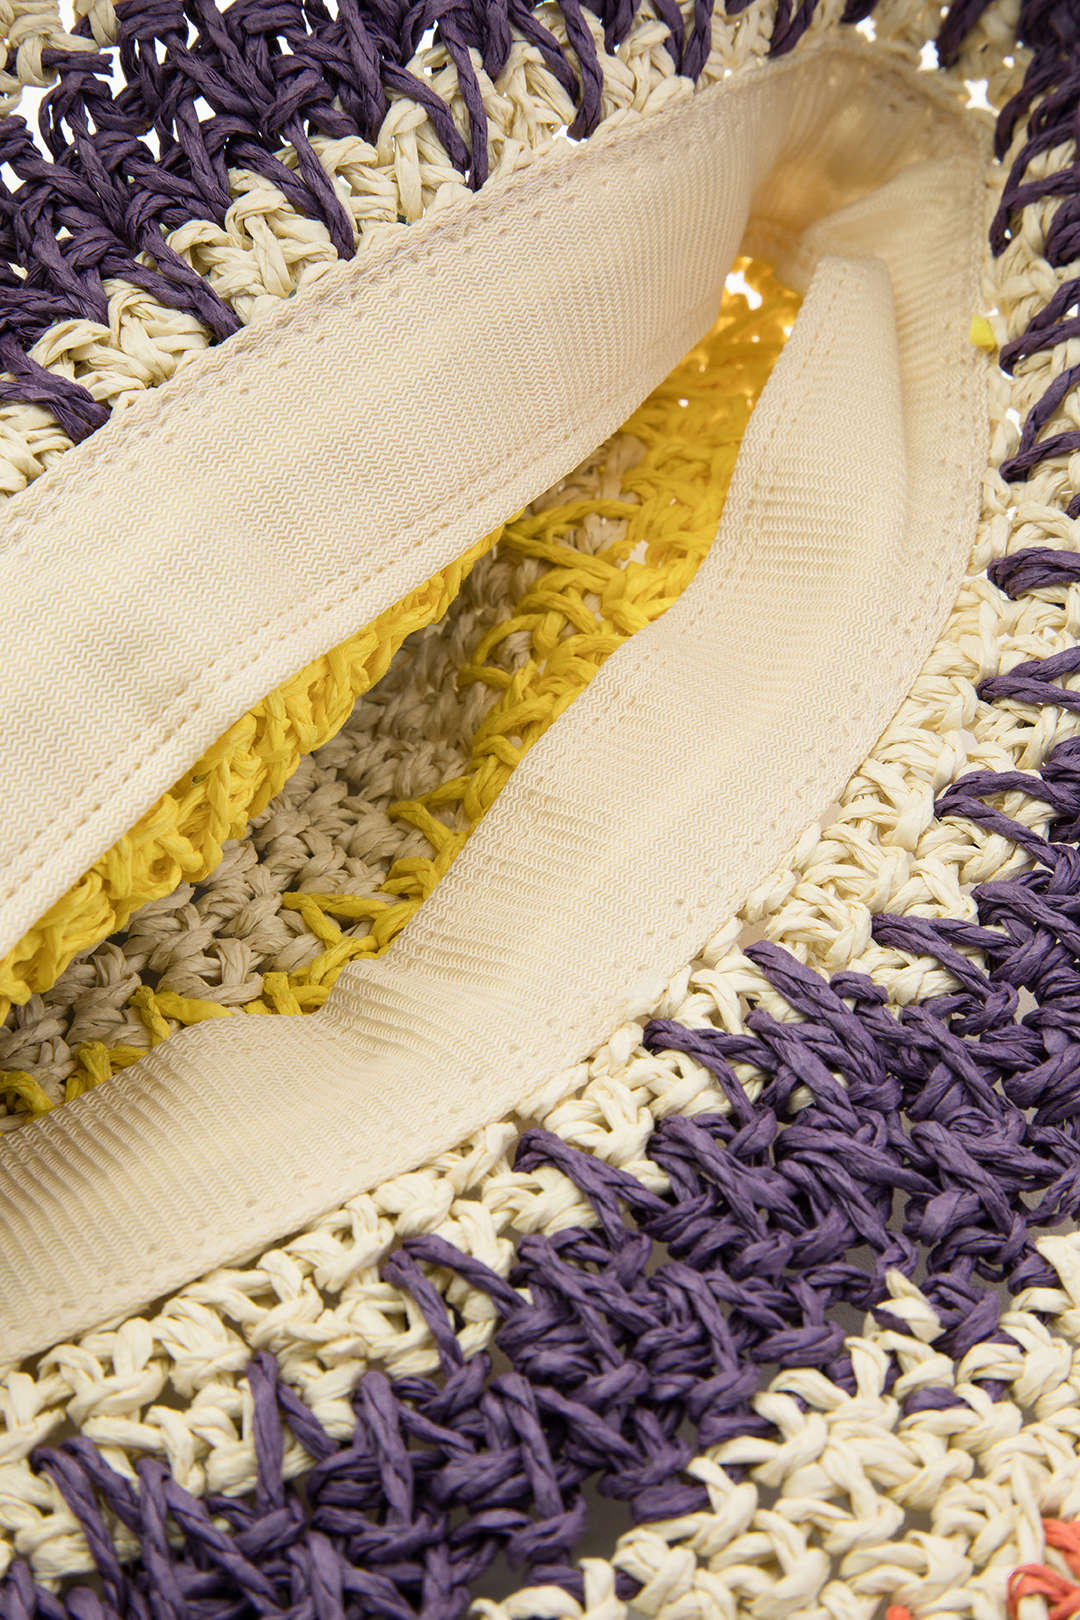 Color Block Crochet Knit Bucket Hat